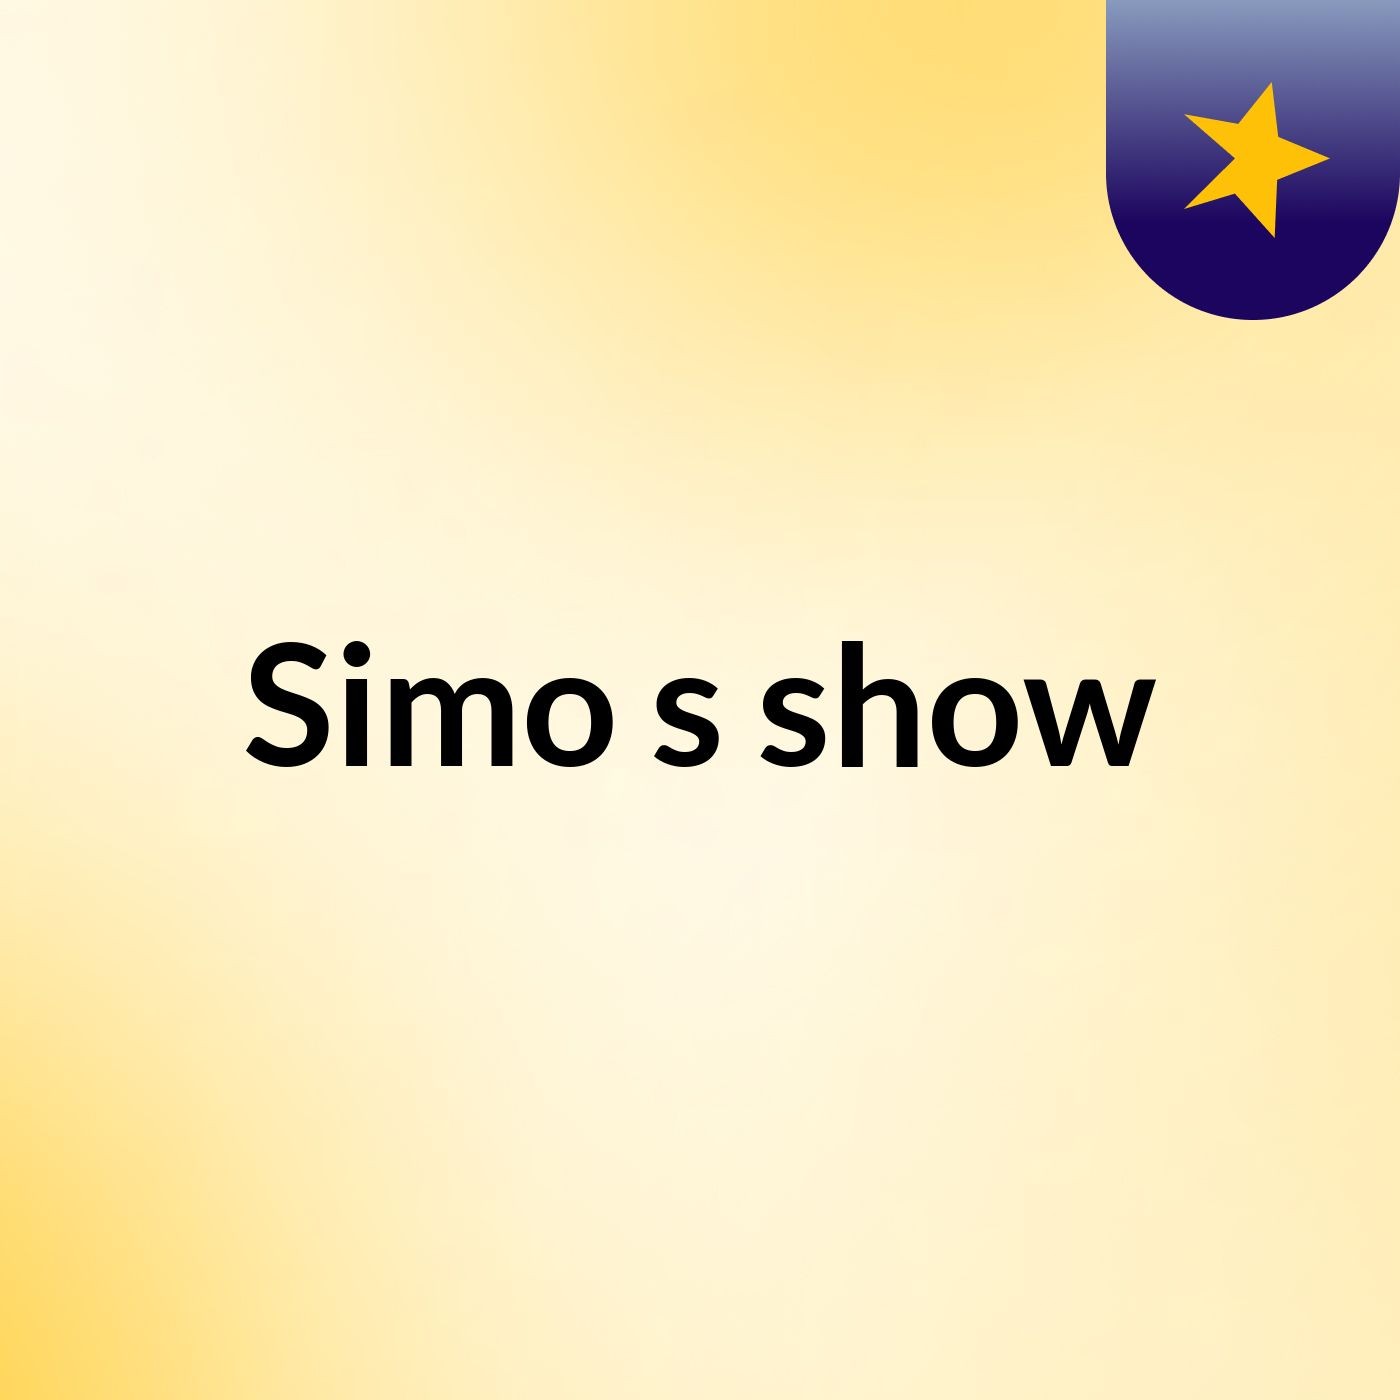 Simo's show